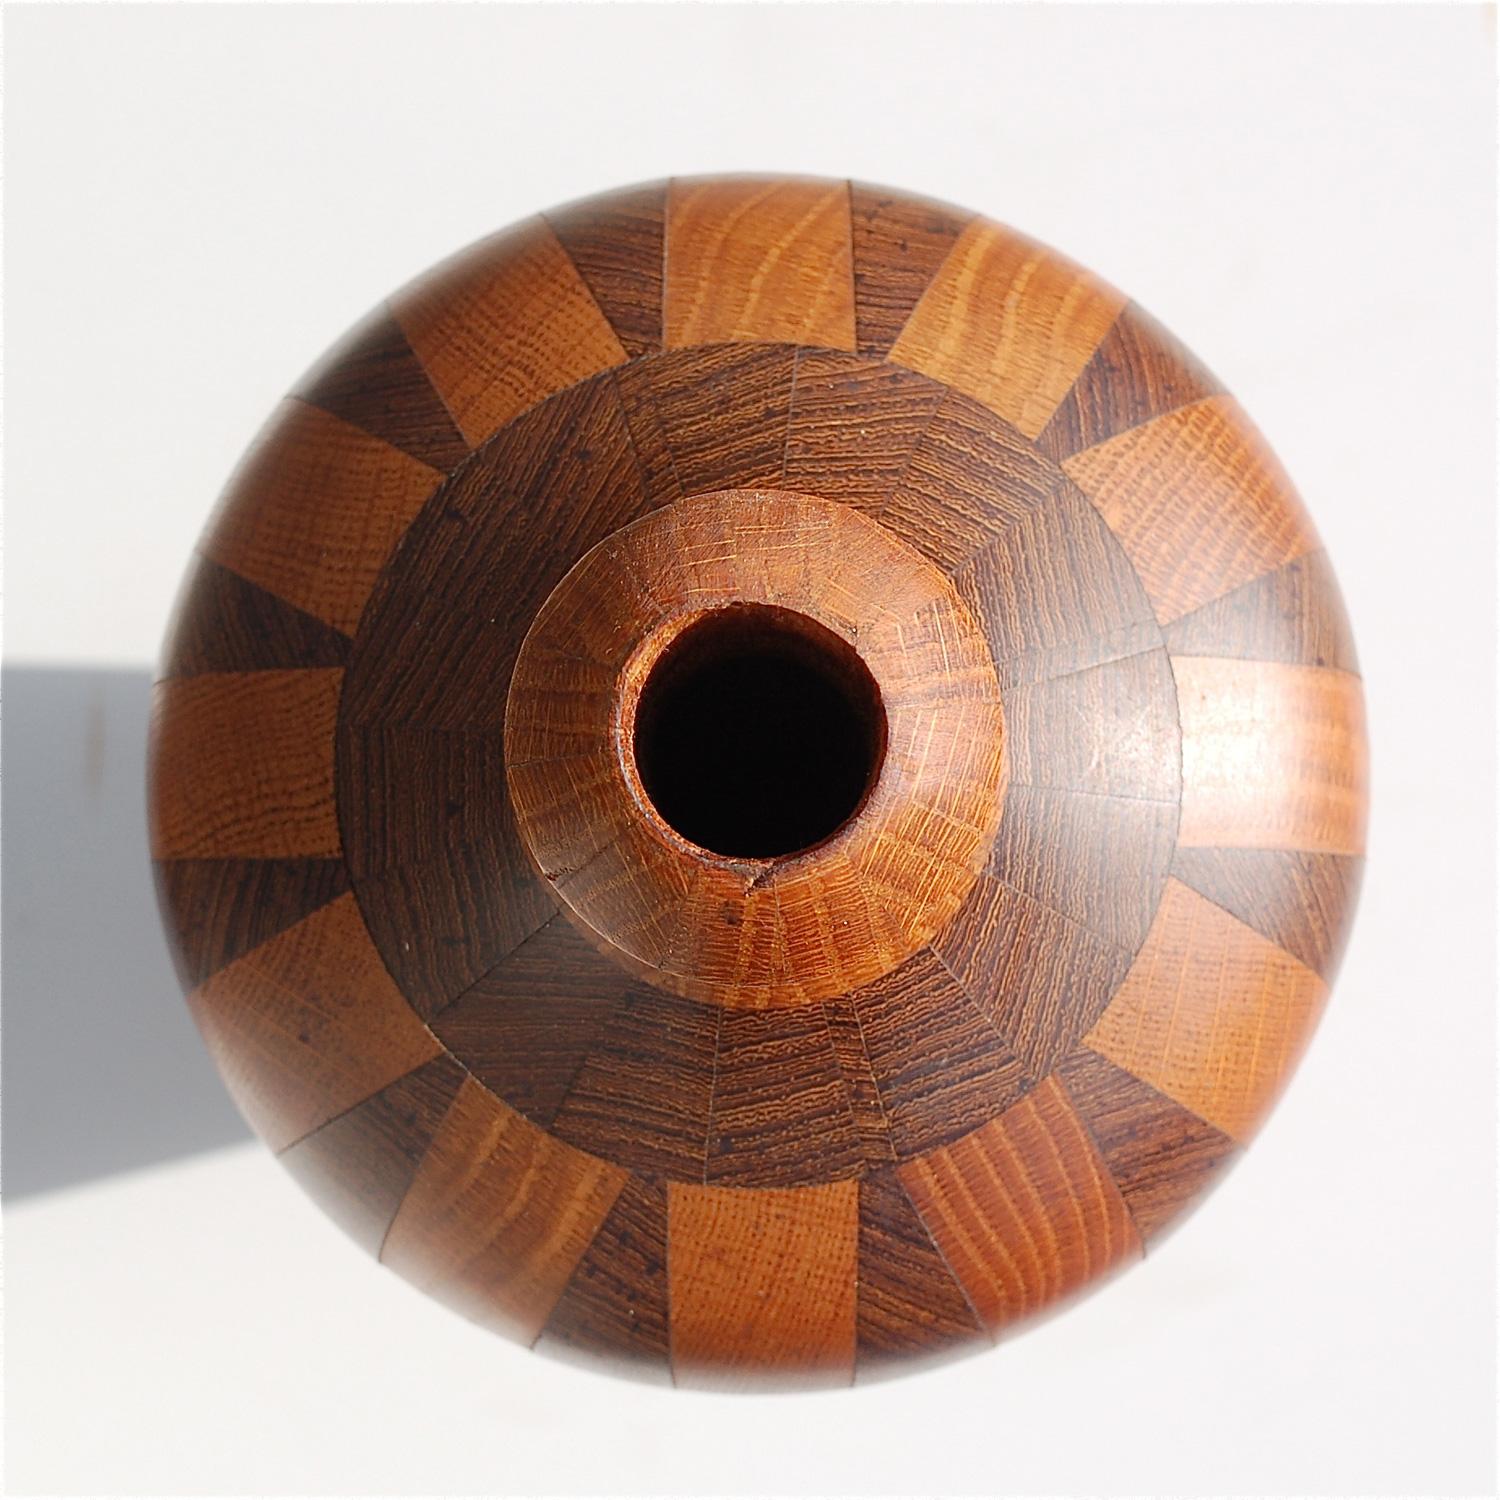 Turned Unique Art Deco Timber Vase, circa 1930s For Sale